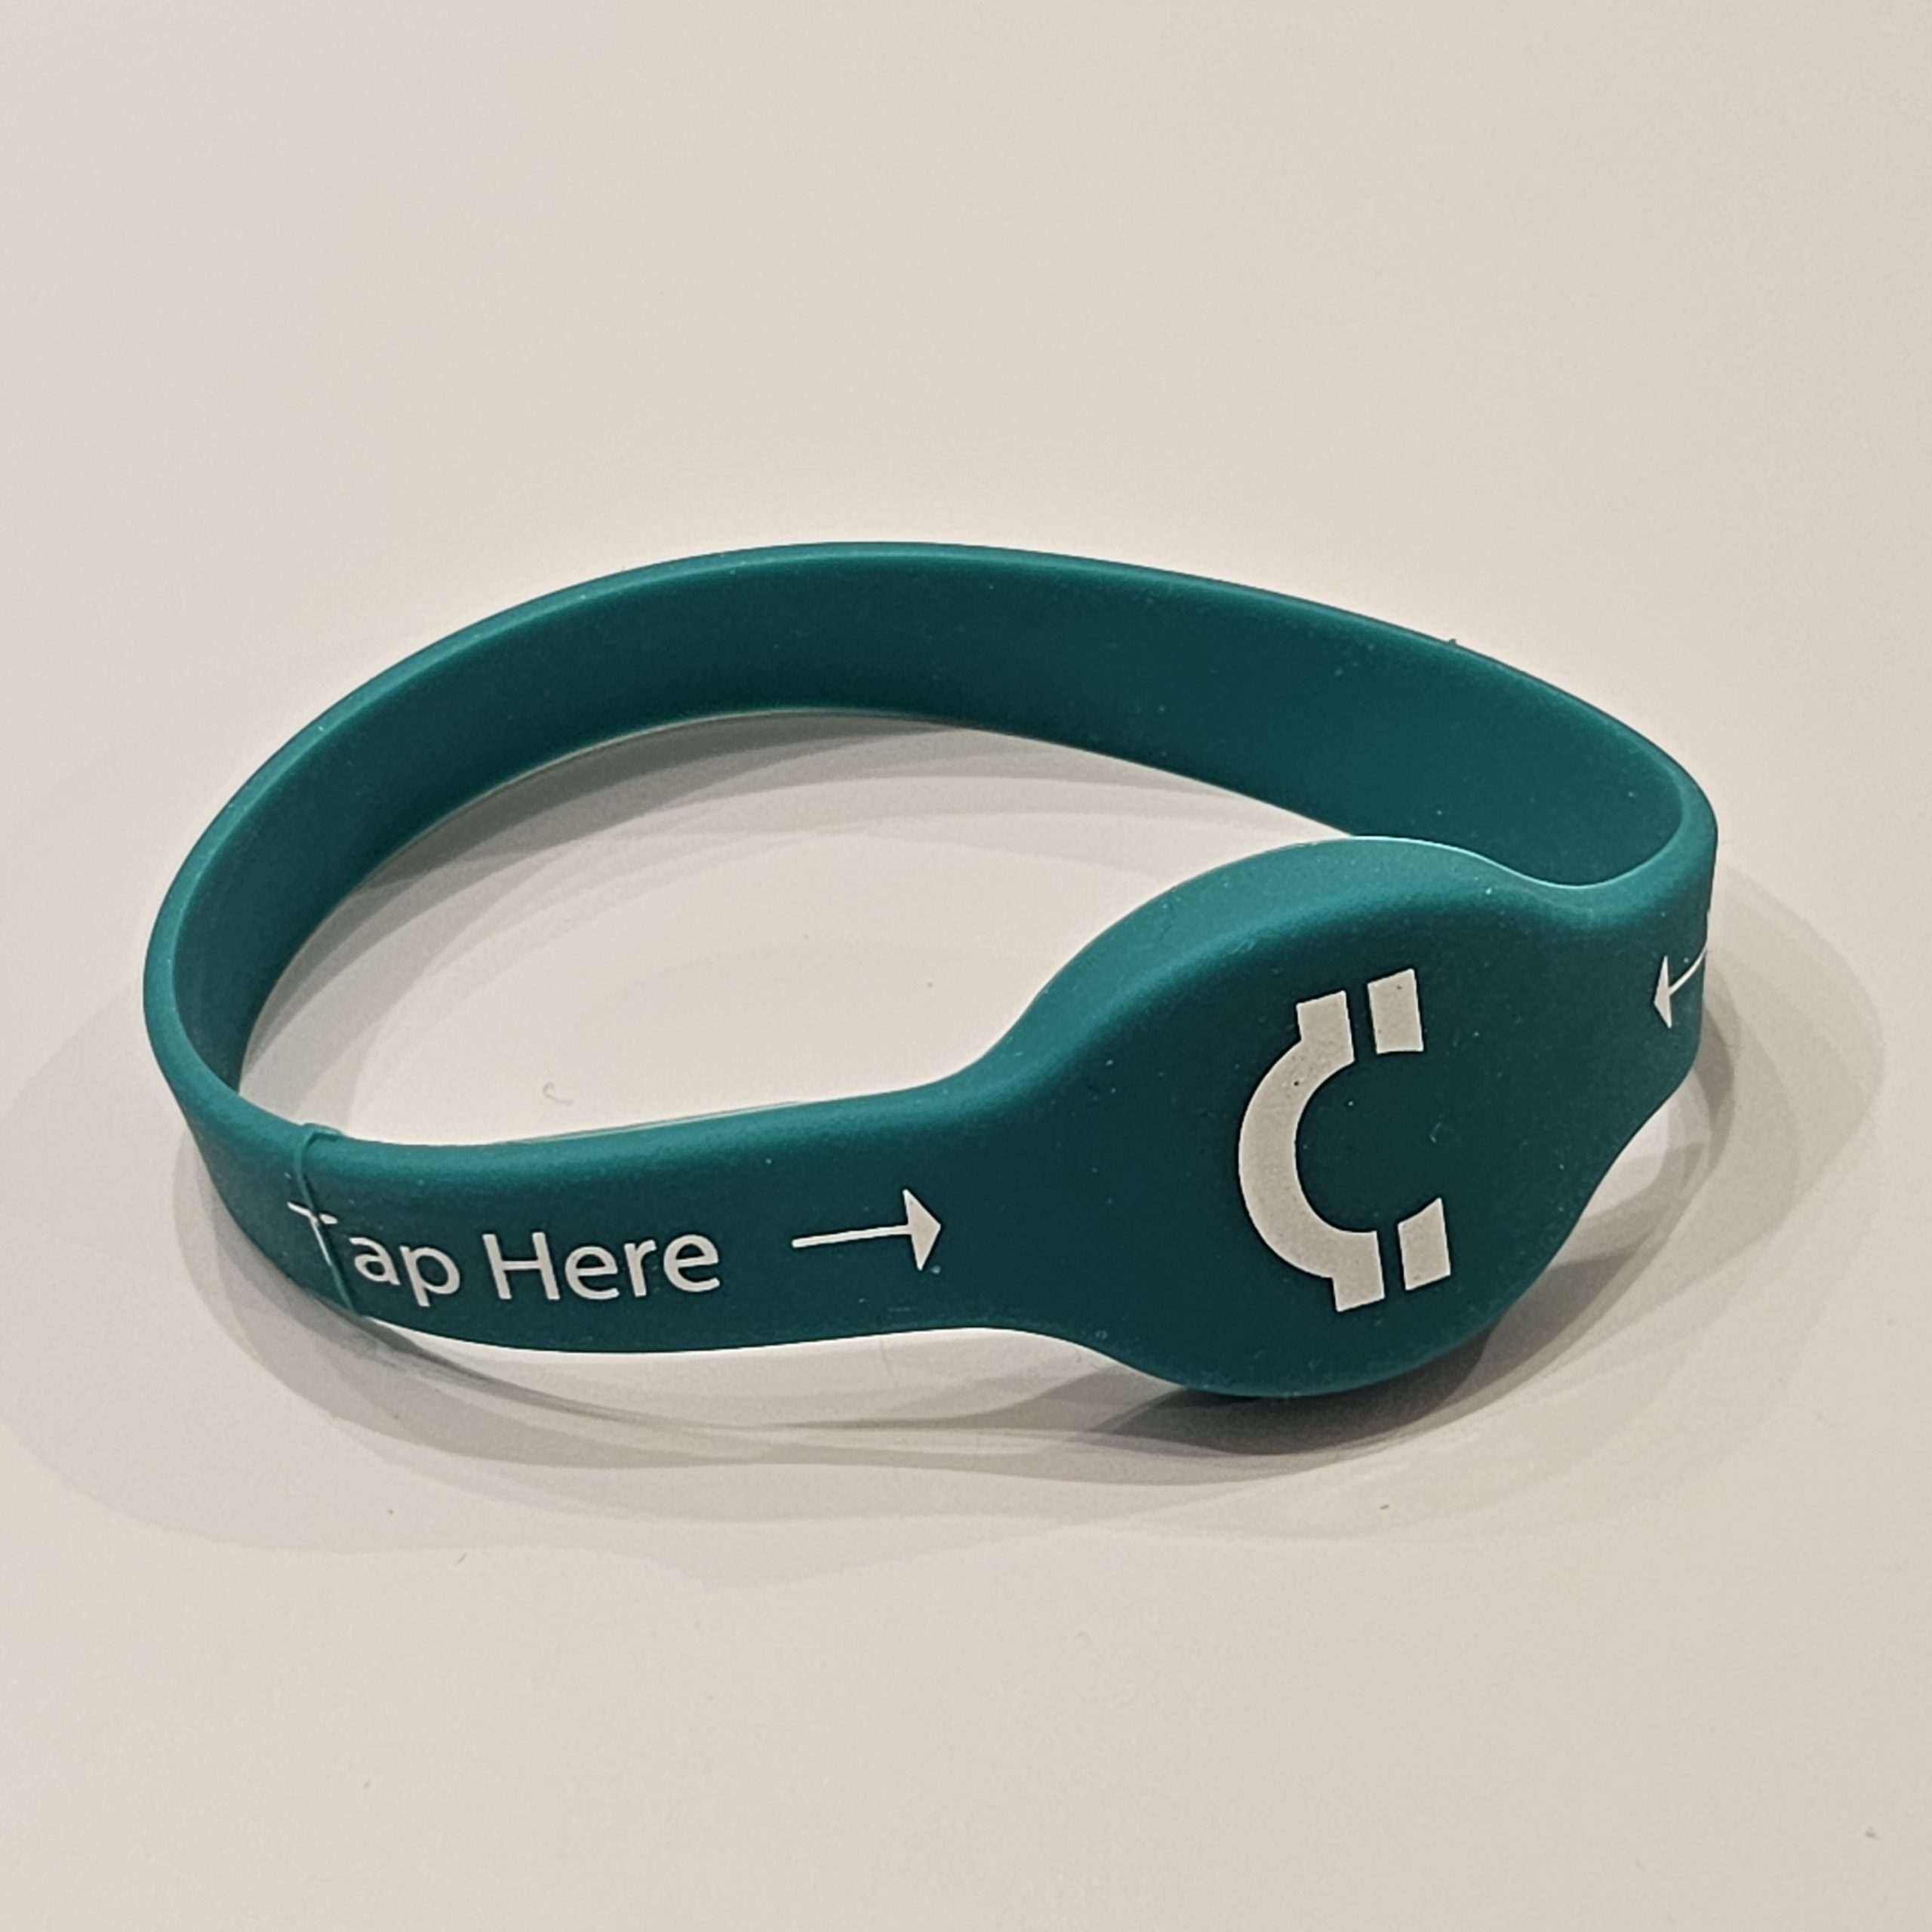 NFC silicone wristband with white silkscreen printing